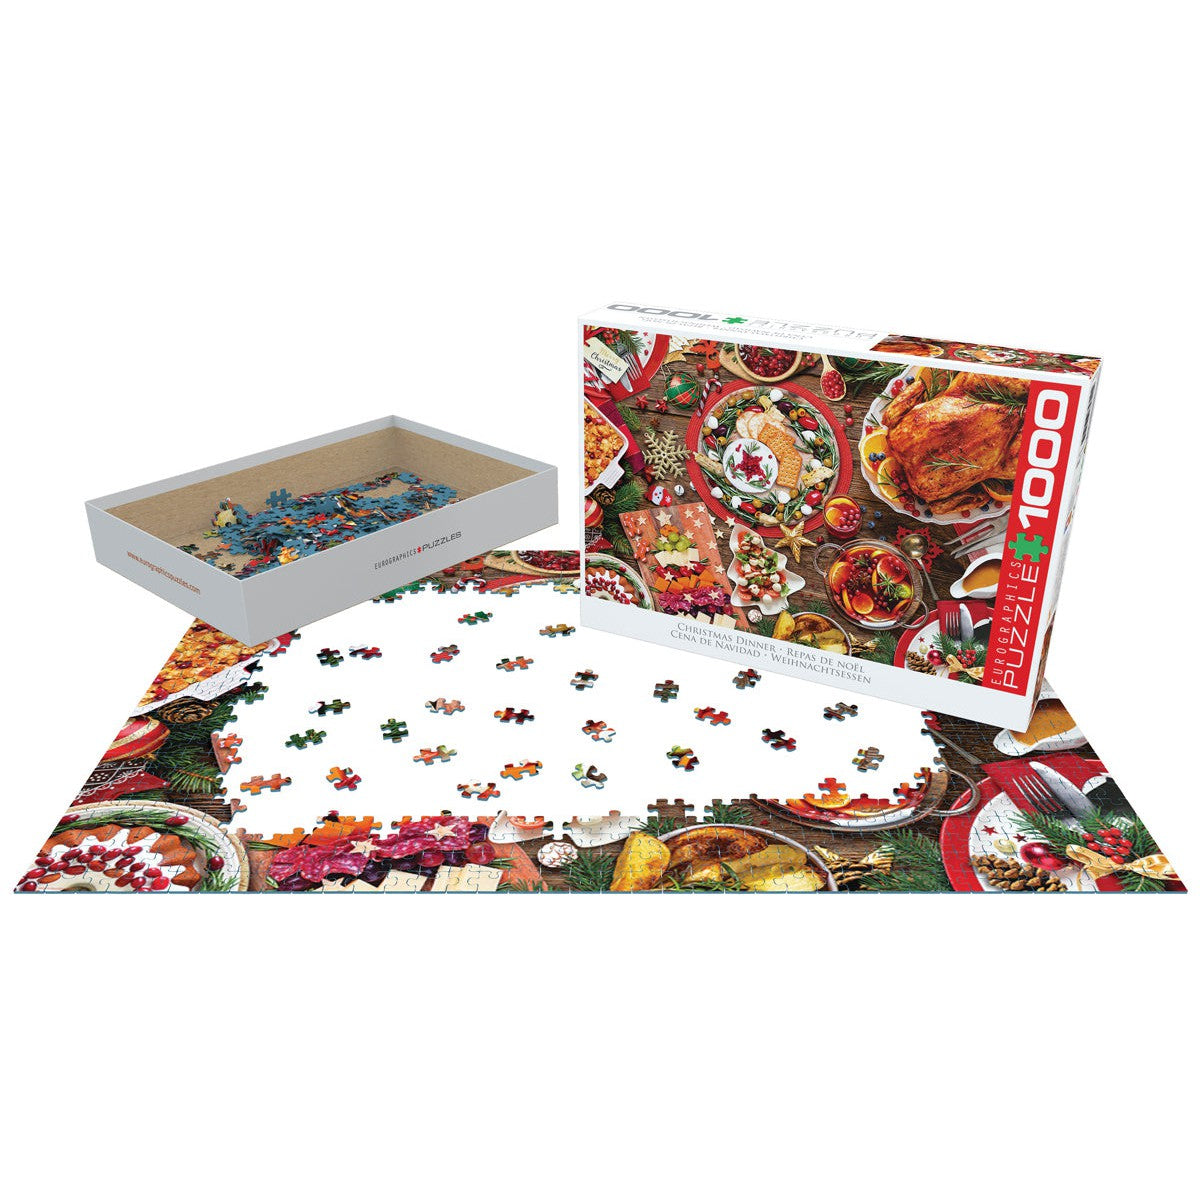 Christmas Dinner 1000 Piece Jigsaw Puzzle Eurographics